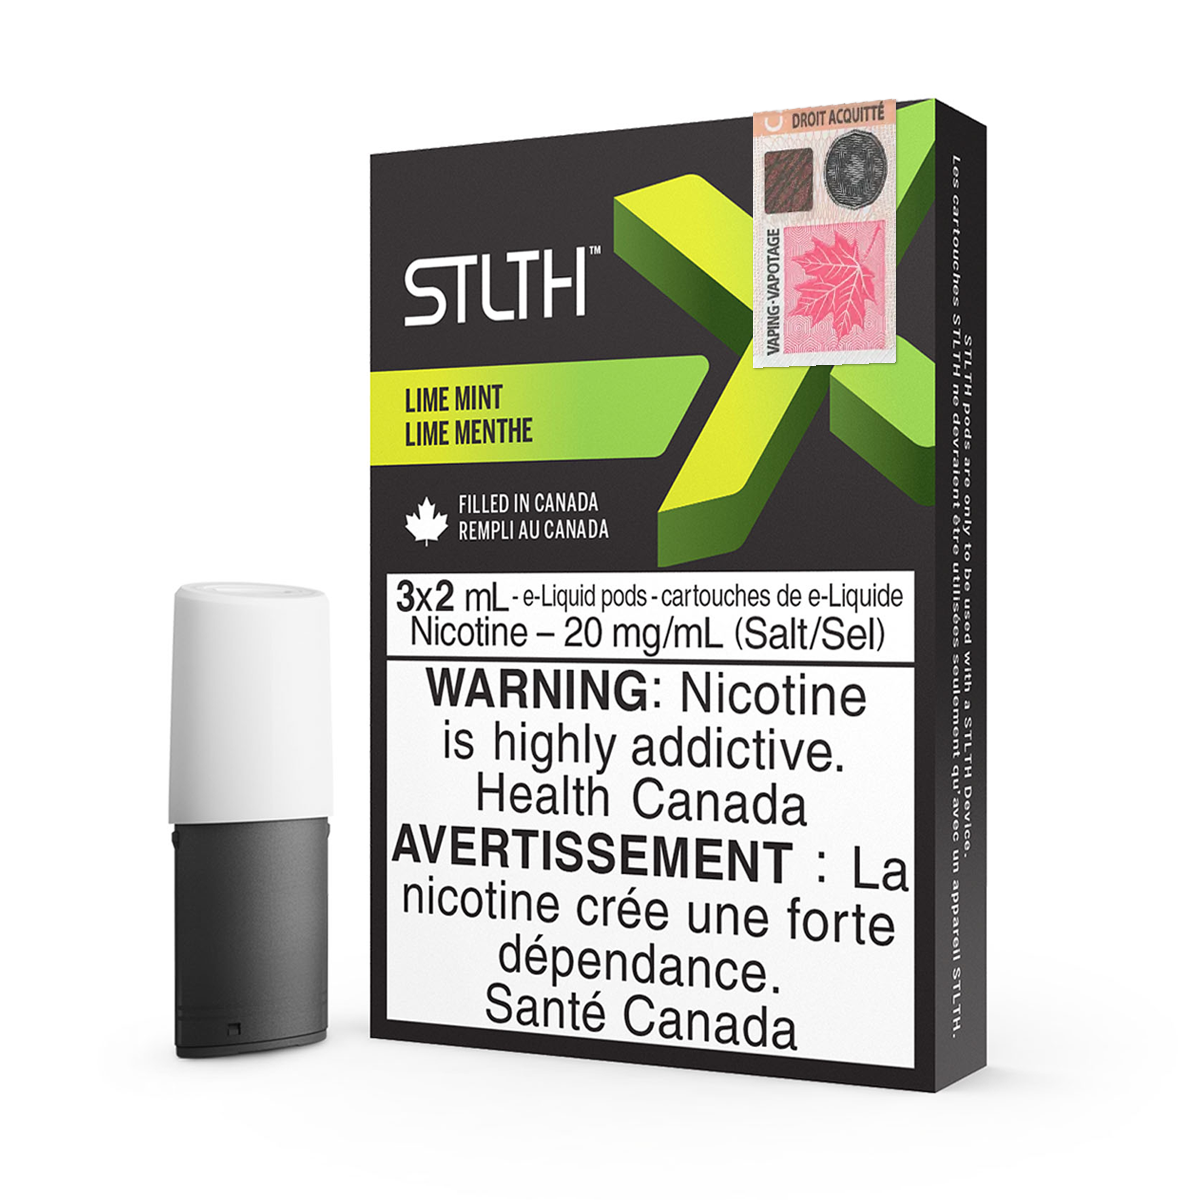 STLTH X Pods - Lime Mint (3x2mL) (6676615331895)